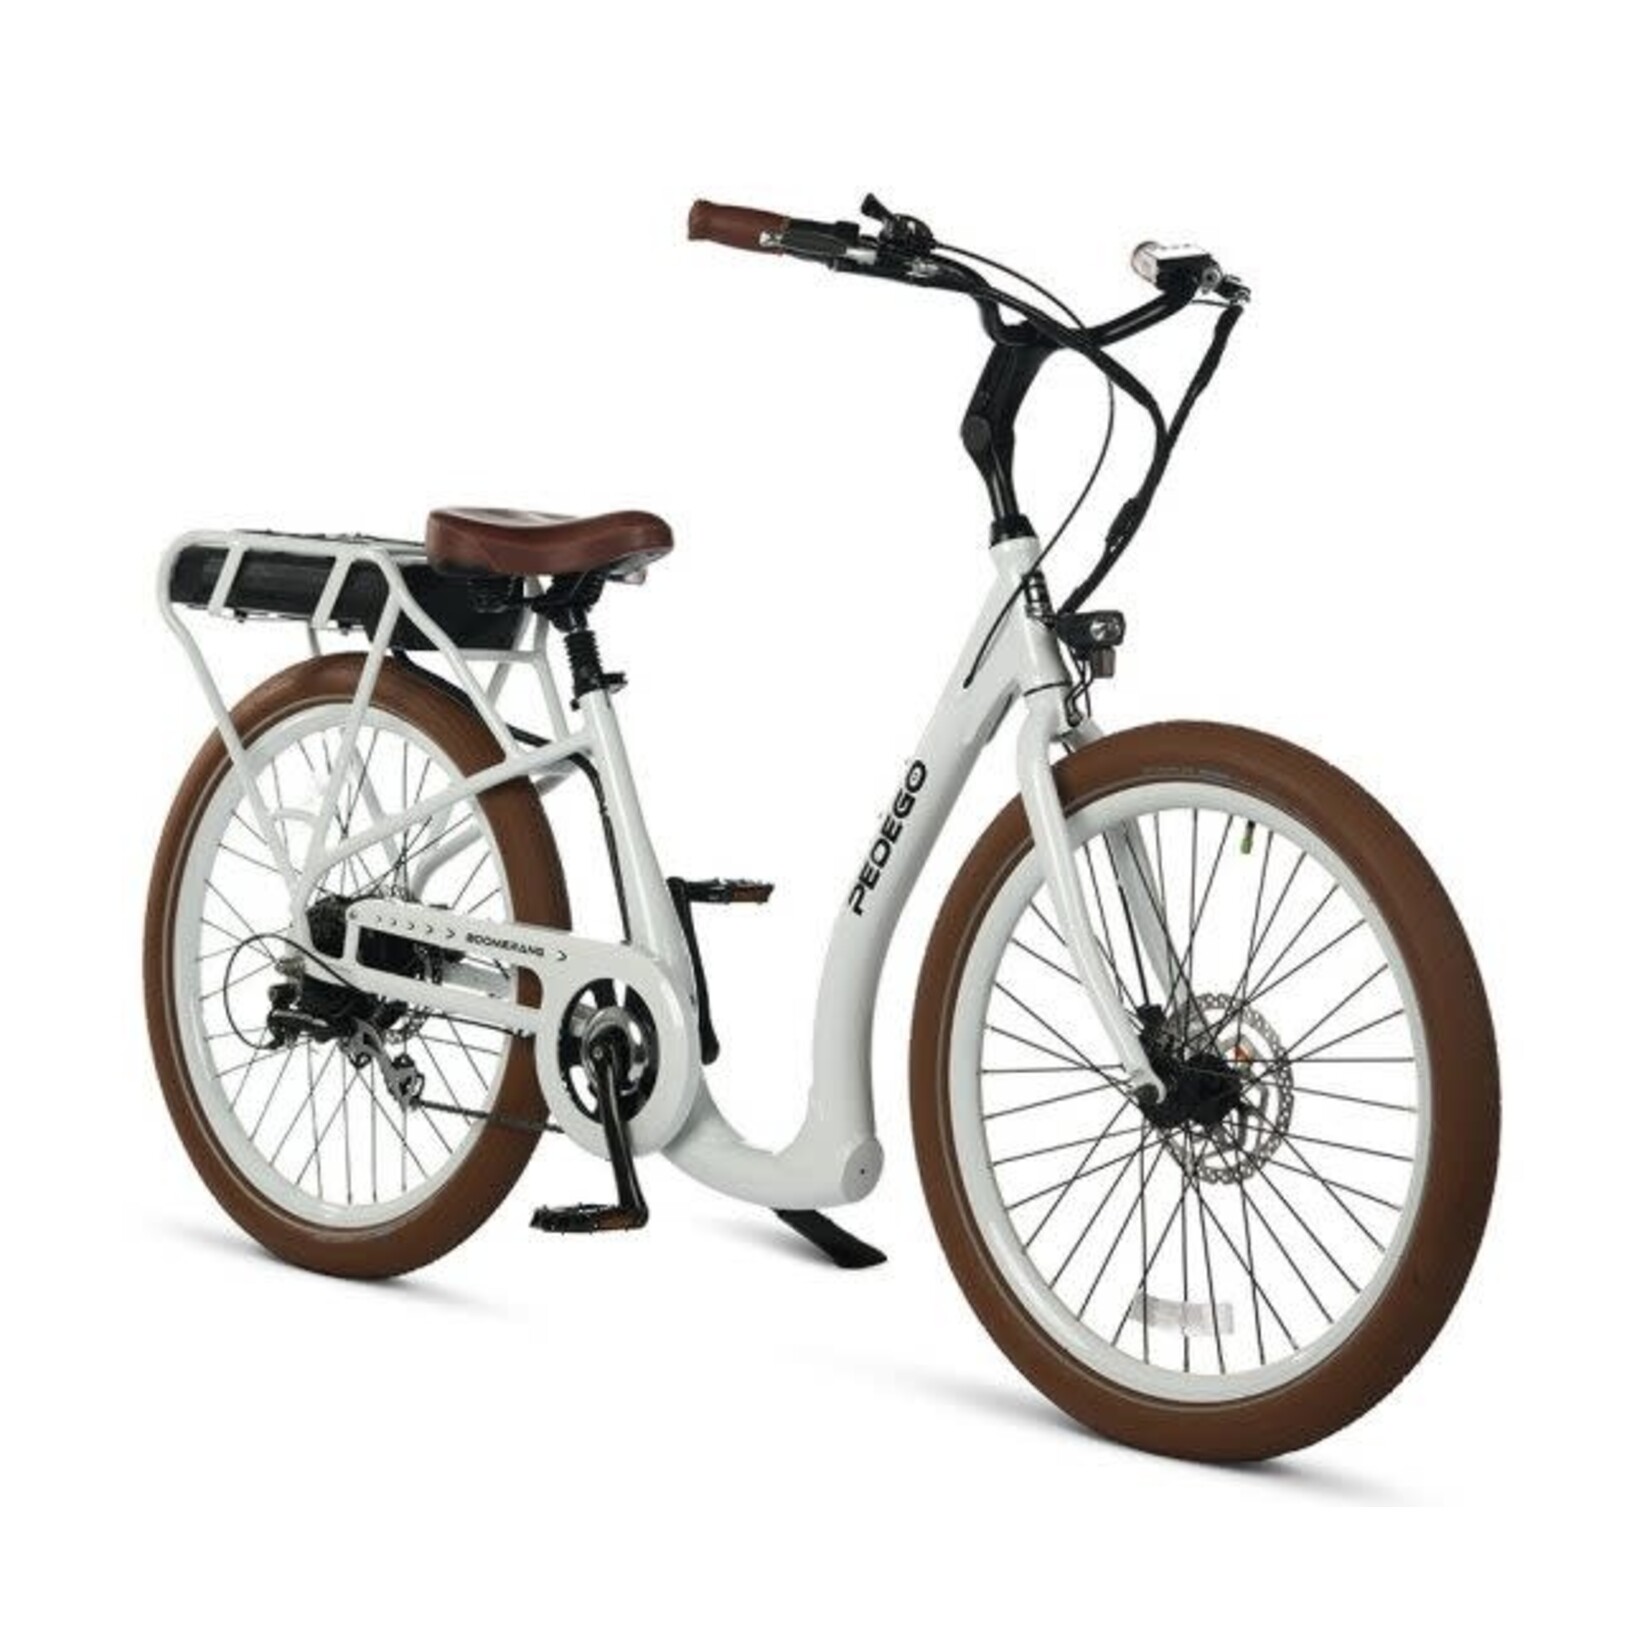 Pedego Electric Bikes Boomerang Plus – Low Step Electric Bike (Bike Only)